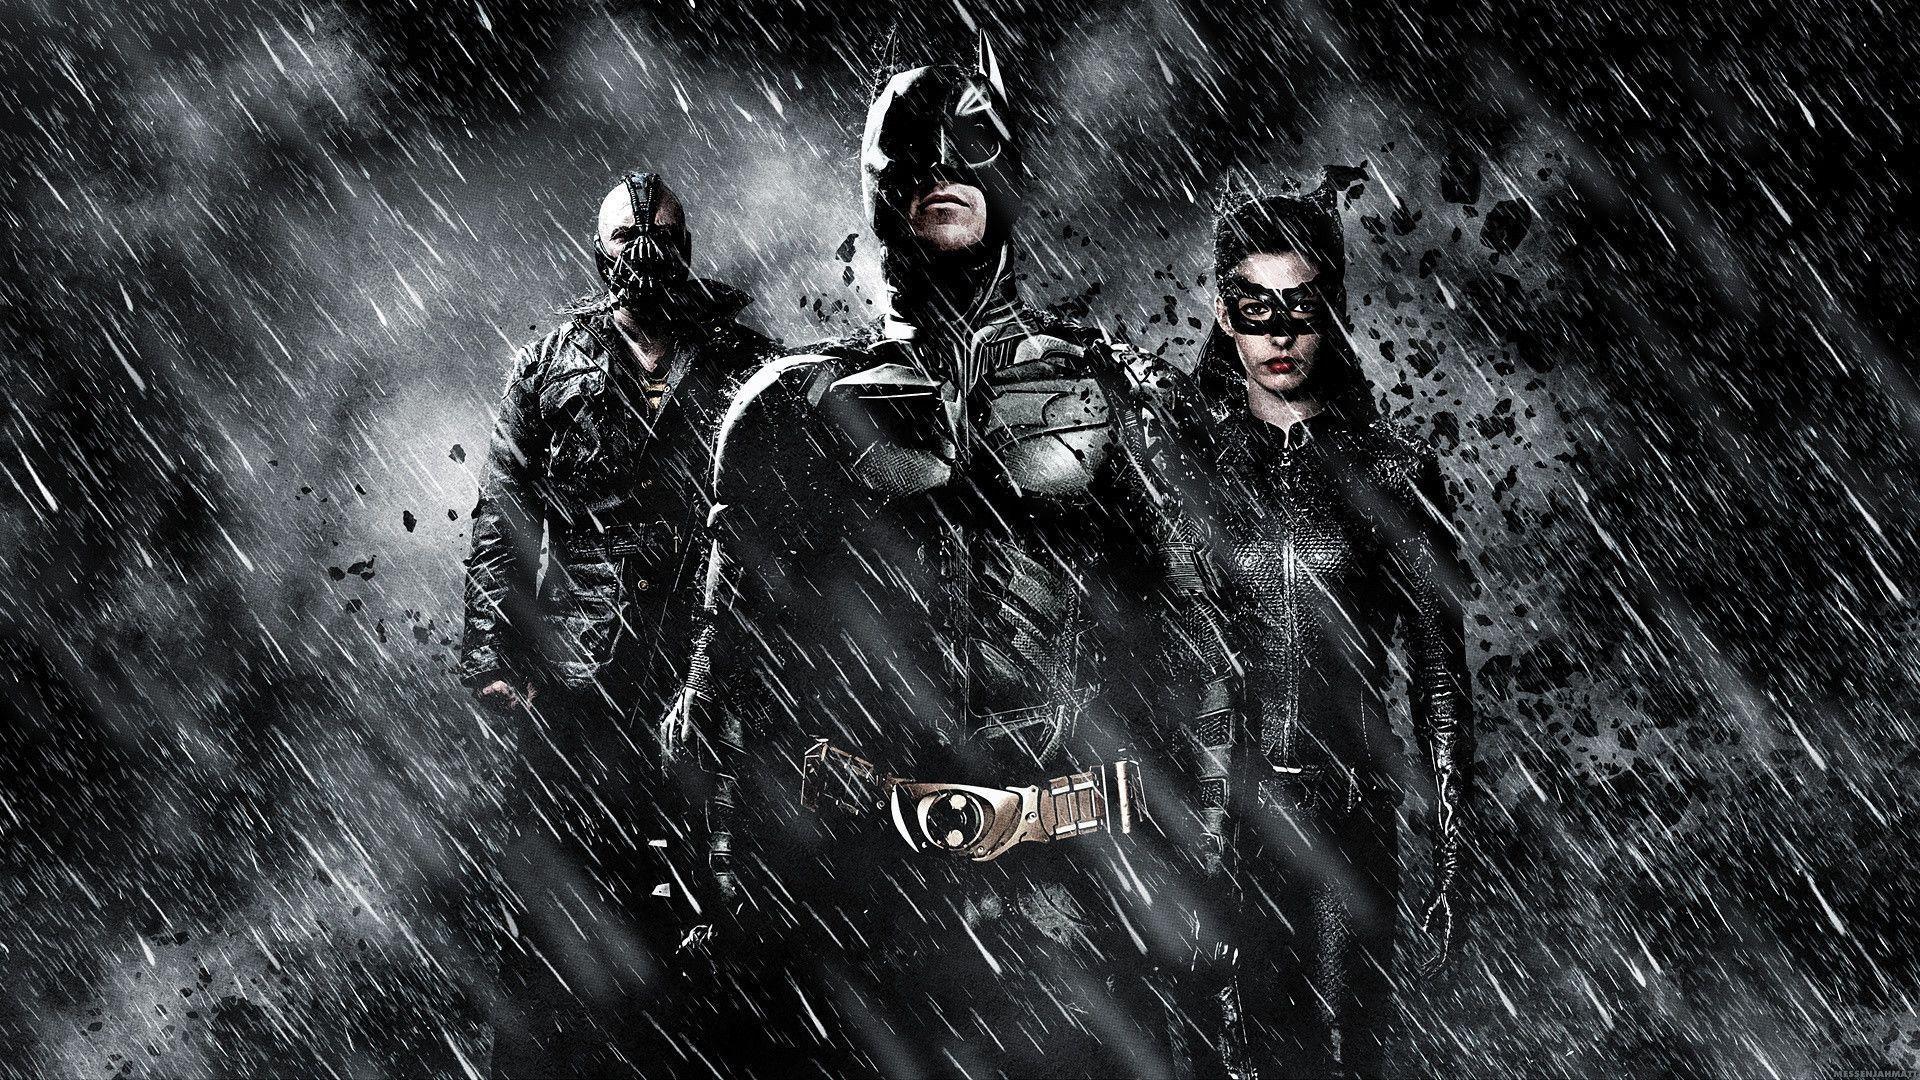 The Dark Knight Rises Movie Wallpaper, HD 1080p. HD Desktop